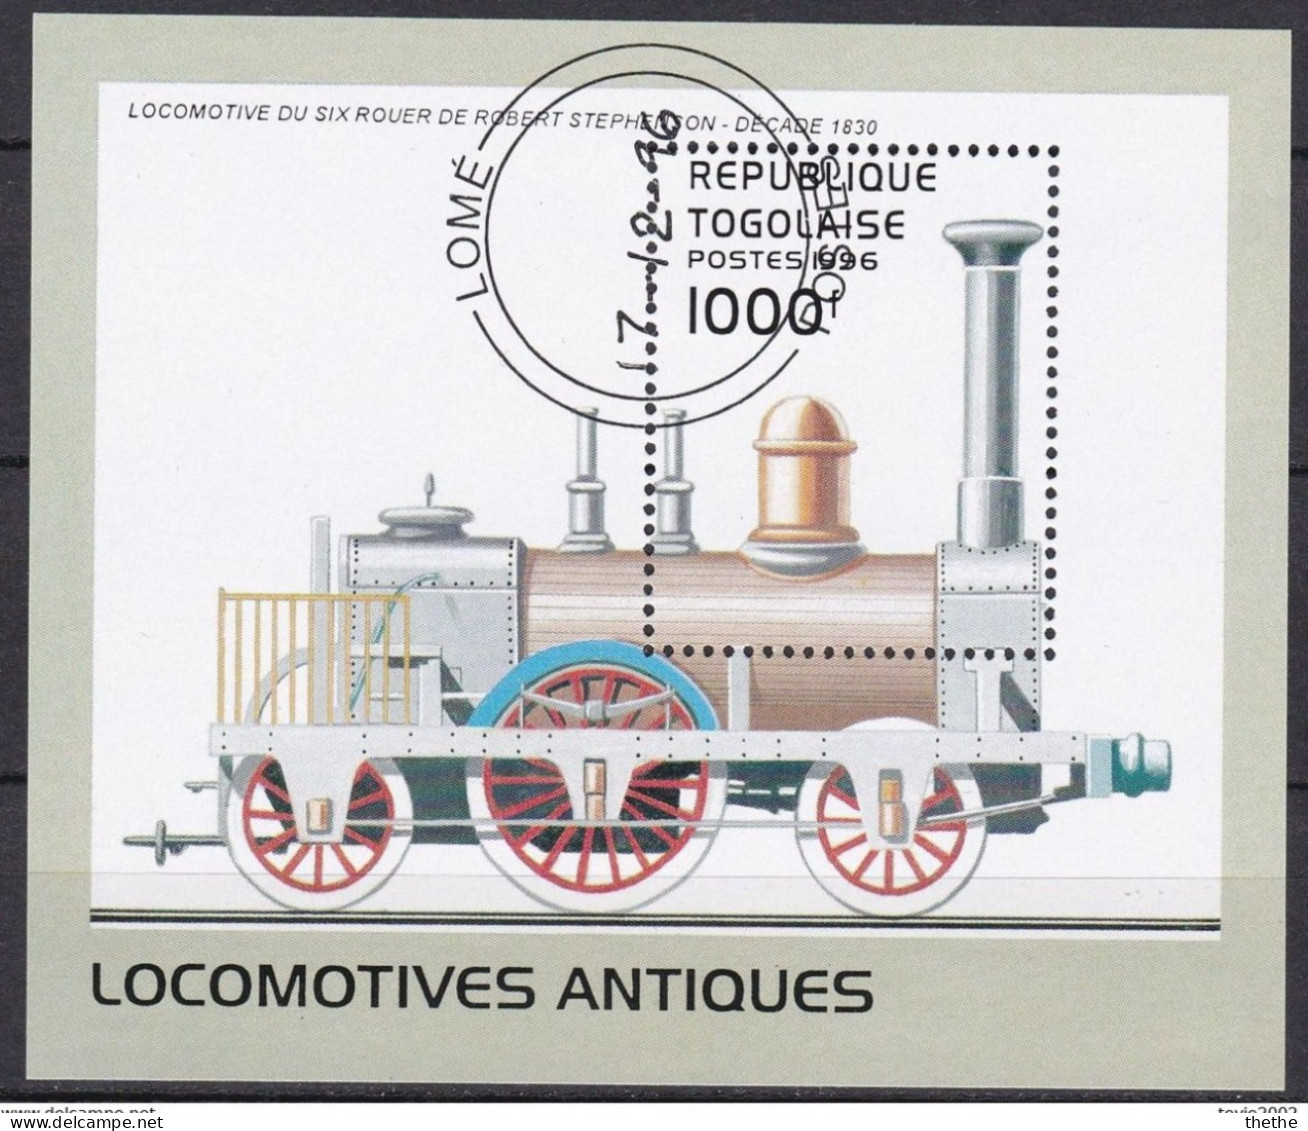 TOGO - Locomotive à Six Roues, Robert Stephenson, 1830 - Trains